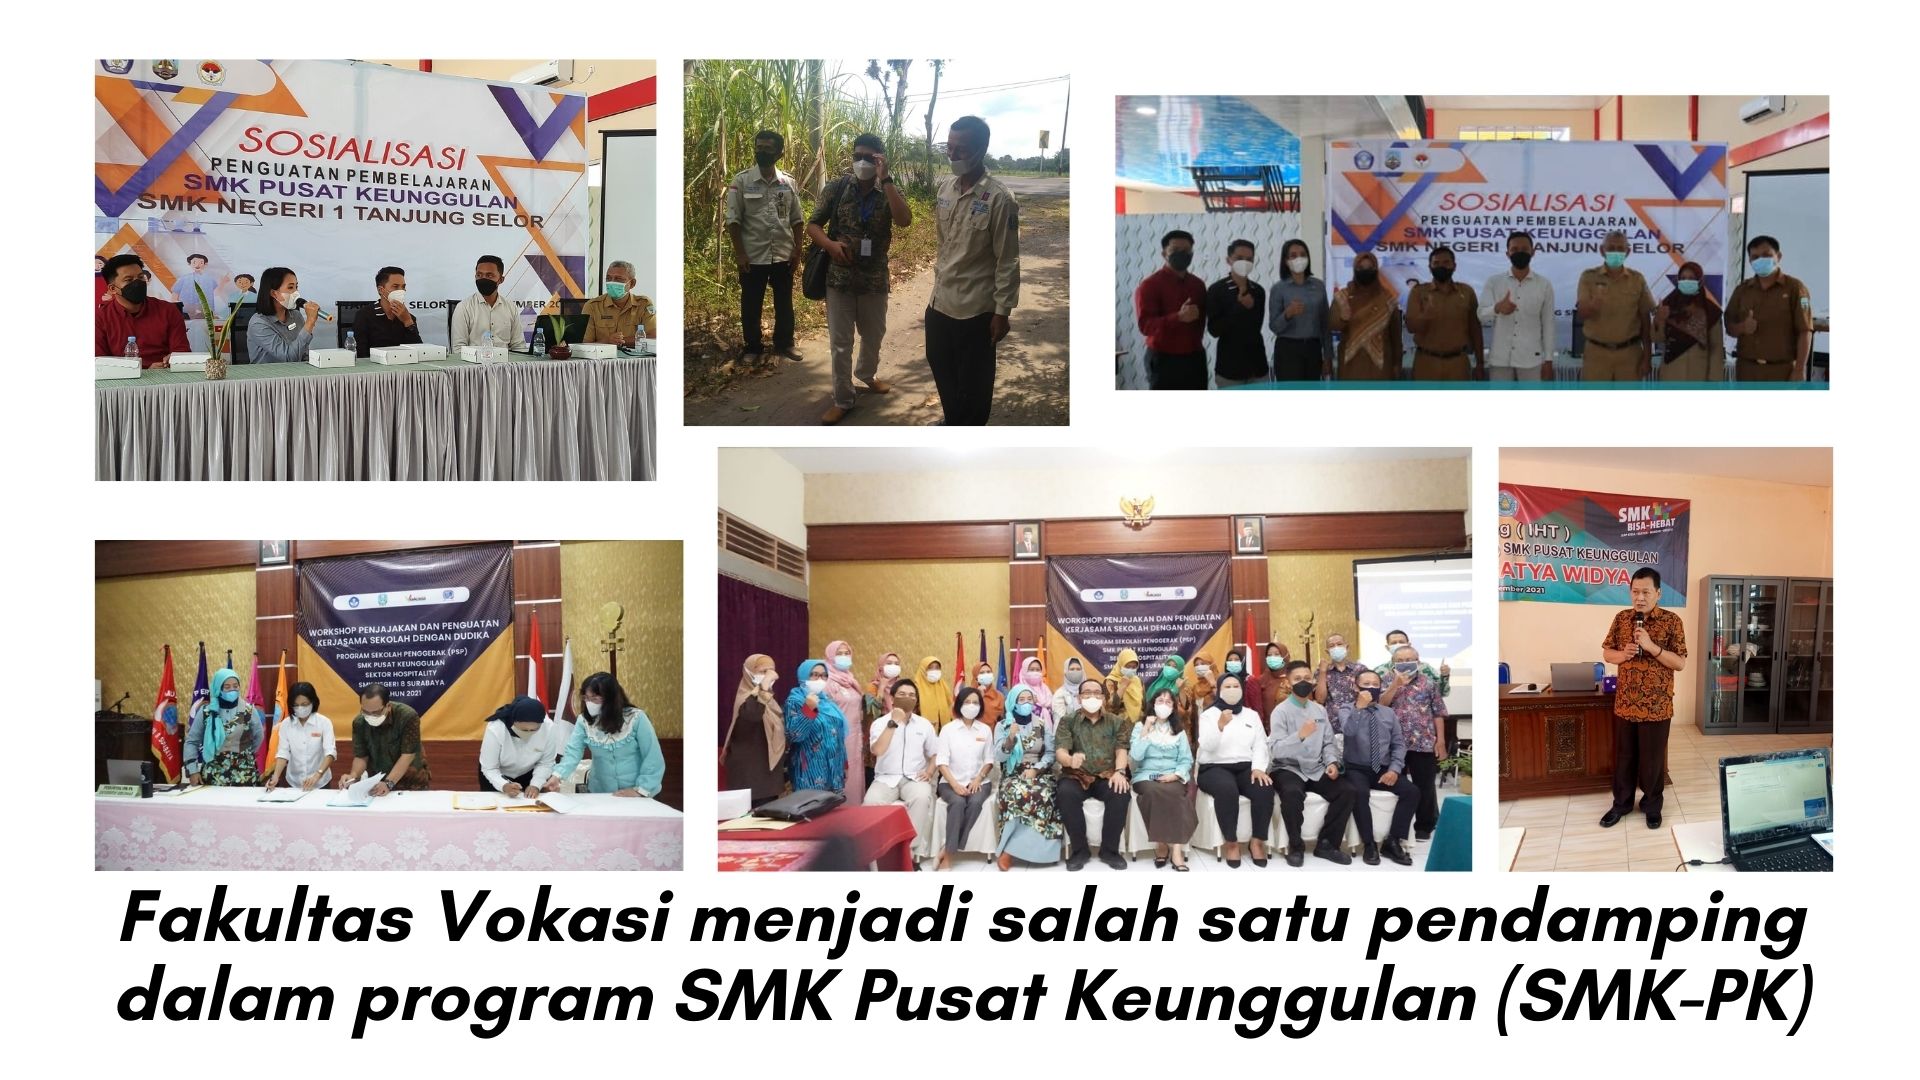 Fakultas Vokasi UNAIR menjadi salah satu pendamping dalam program SMK-PK yang diselenggarakan oleh KEMENDIKBUD